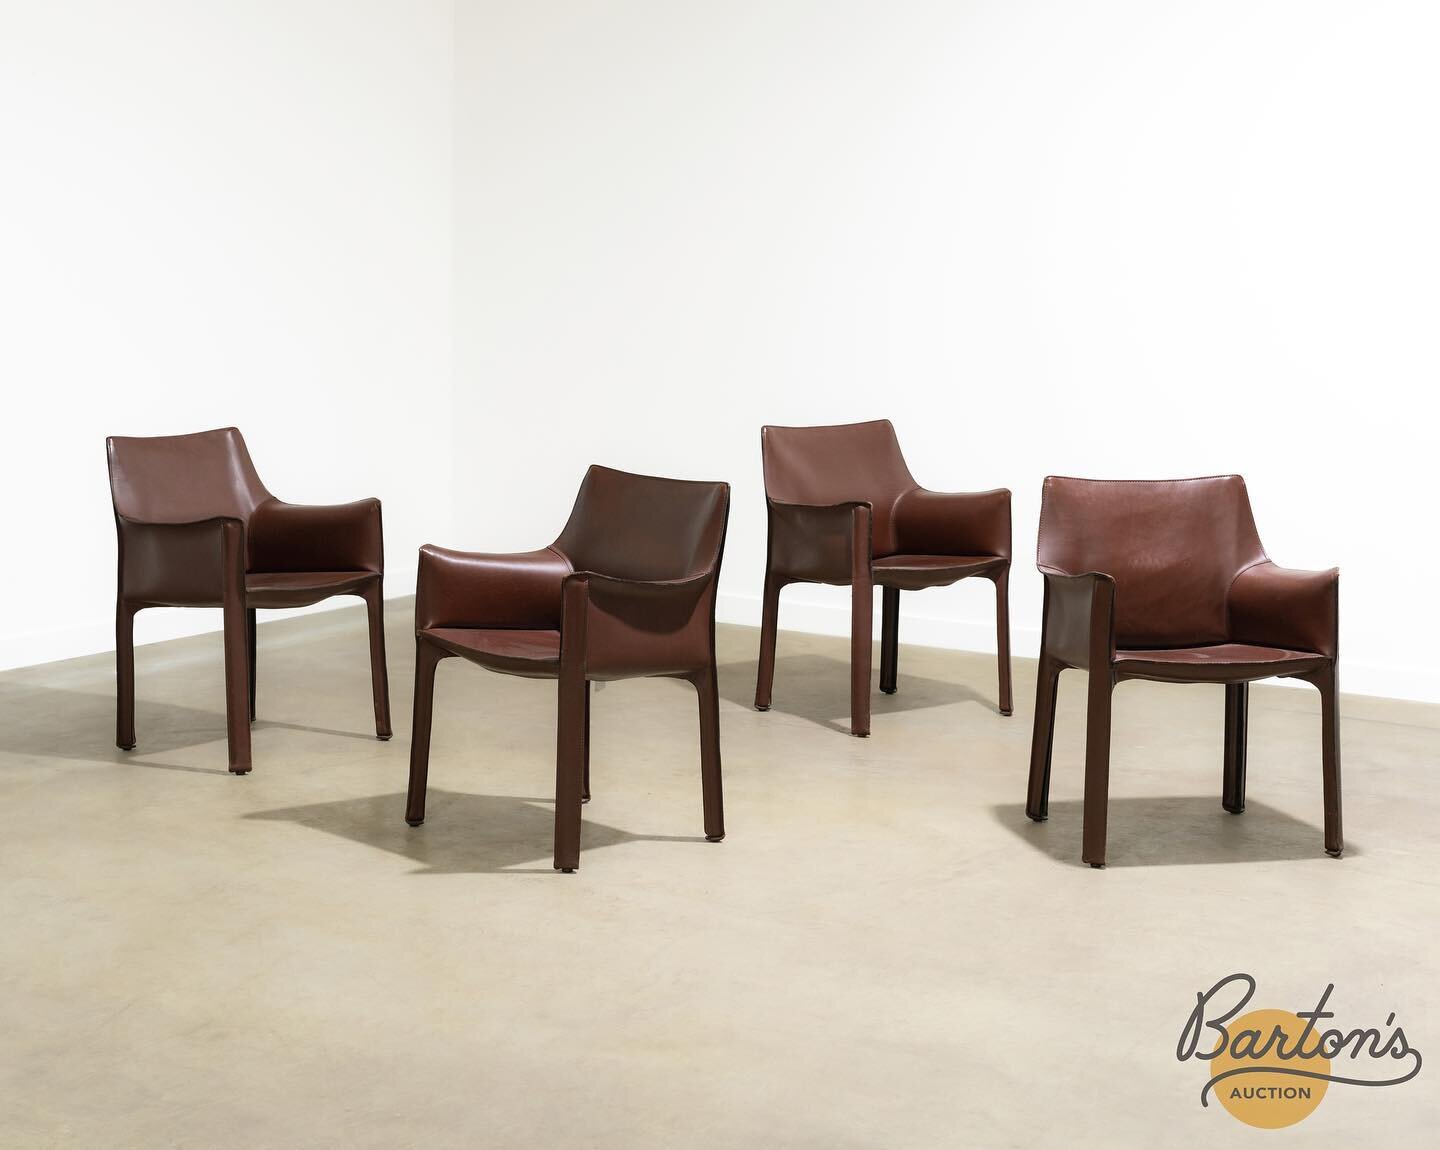 Mario Bellini Cab dining chairs X 4 😍 Link in bio. Bid now !